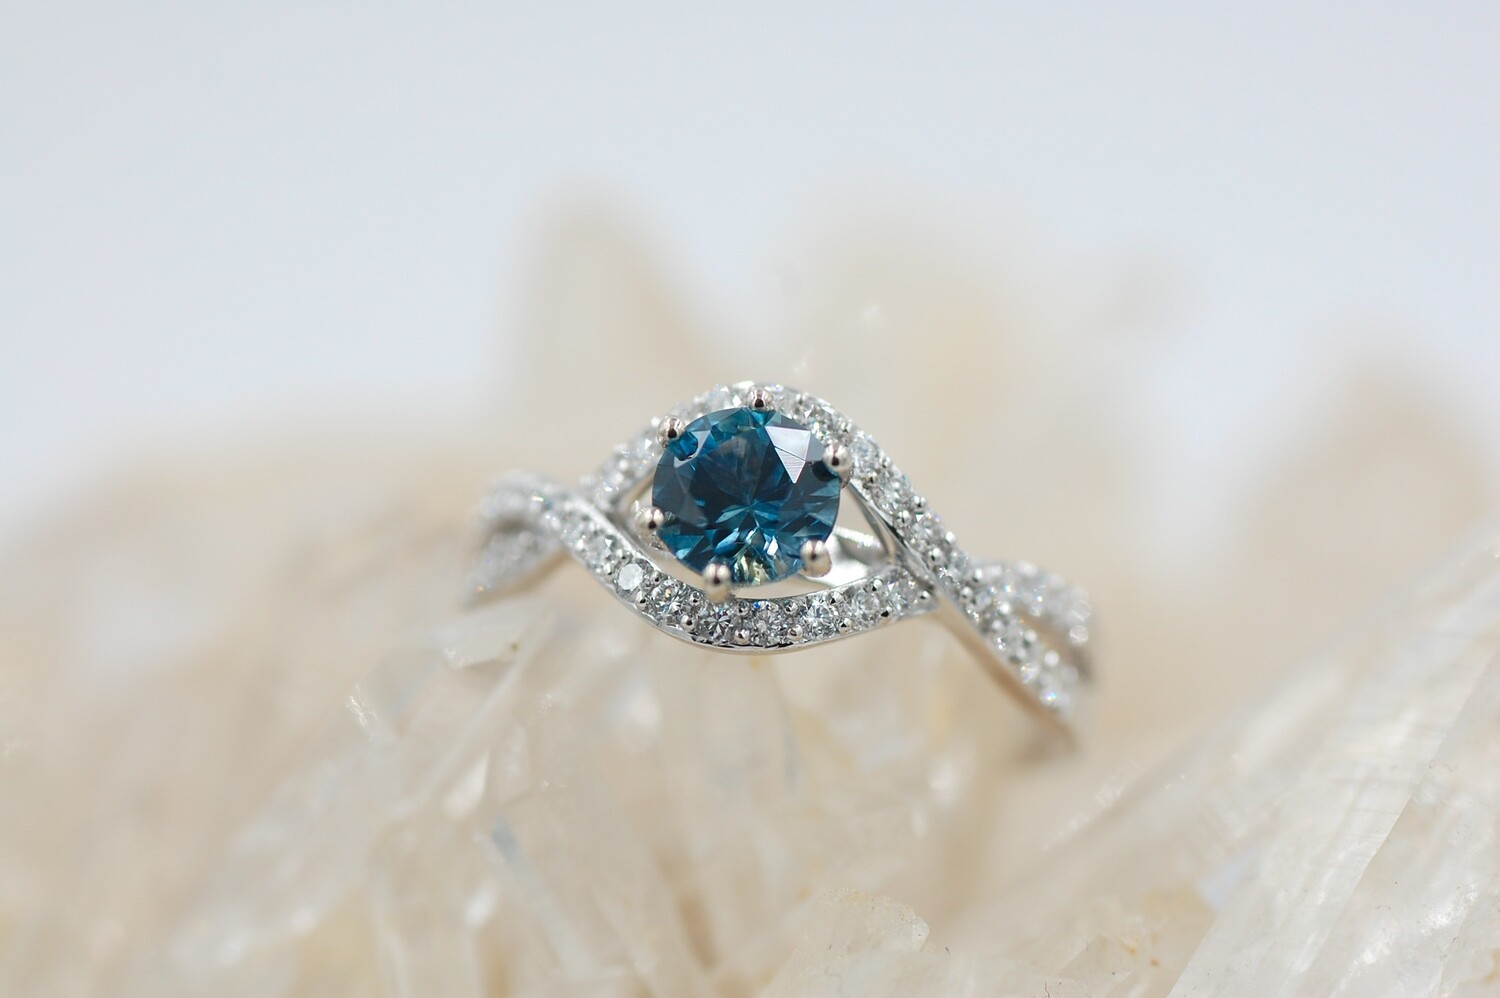 MT sapphire/diamond ring - 14kw (3/4ct saph/1/3cttw diamonds)